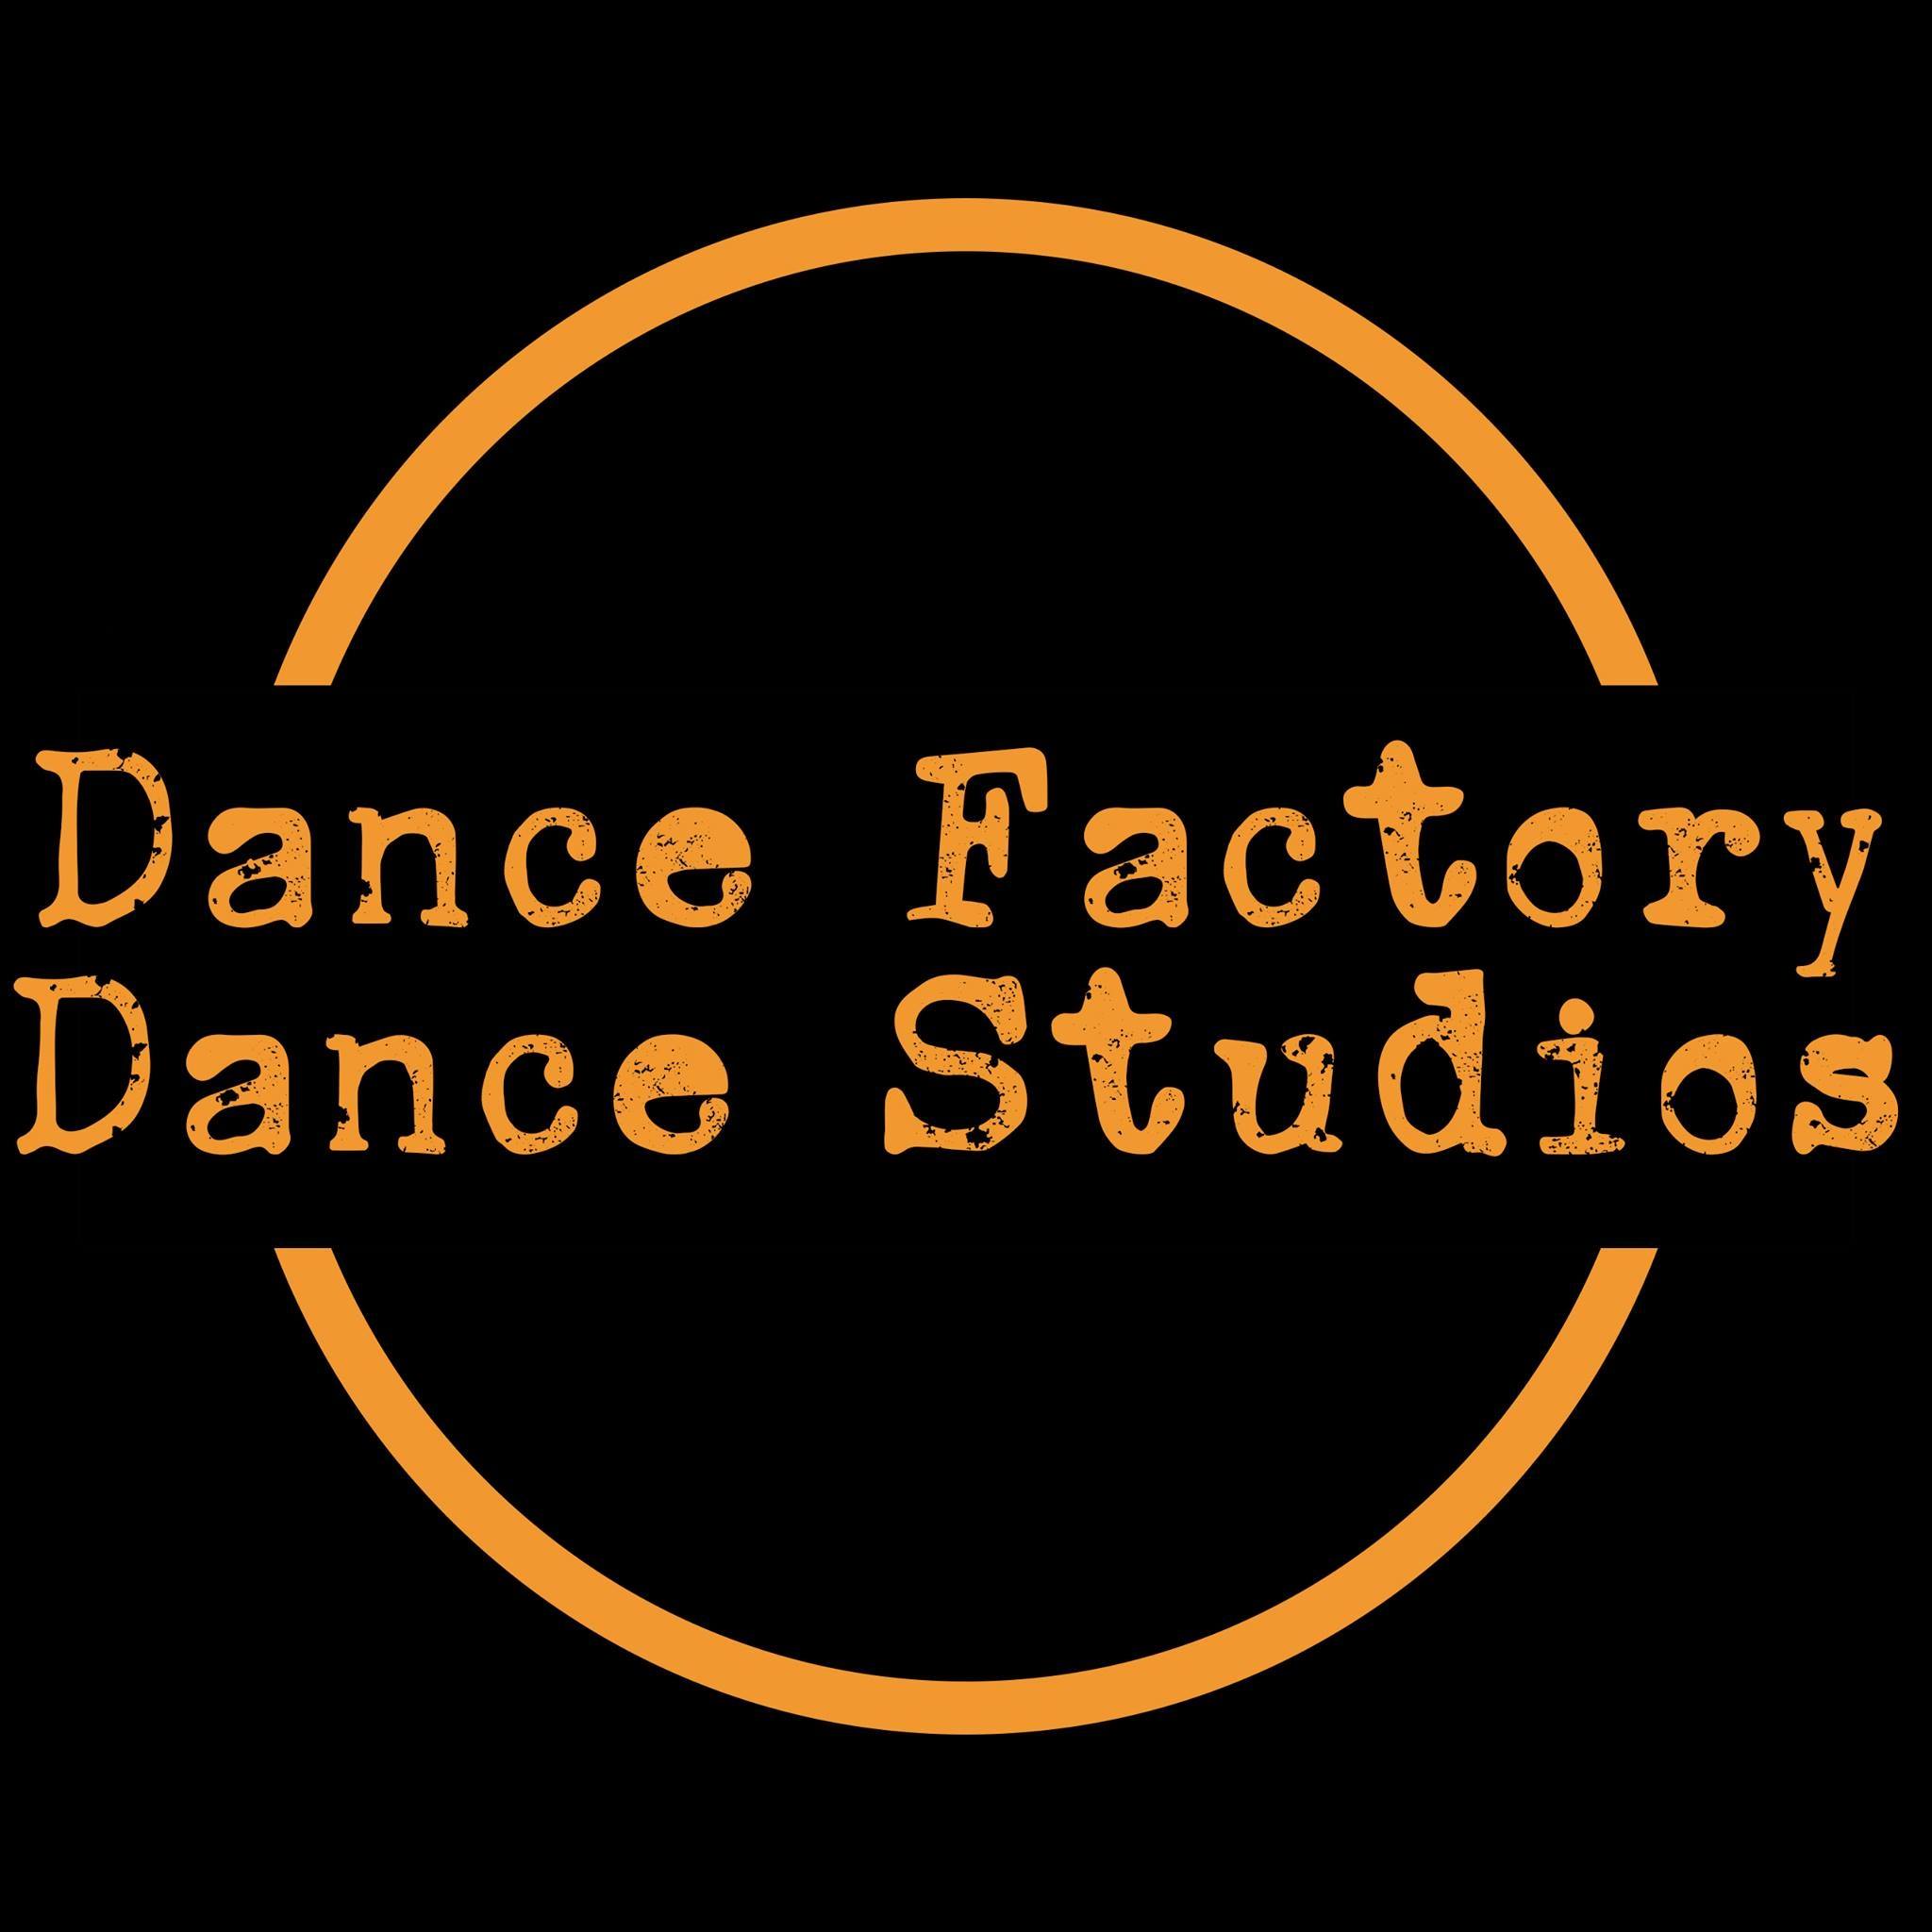 The Dance Factory Logo